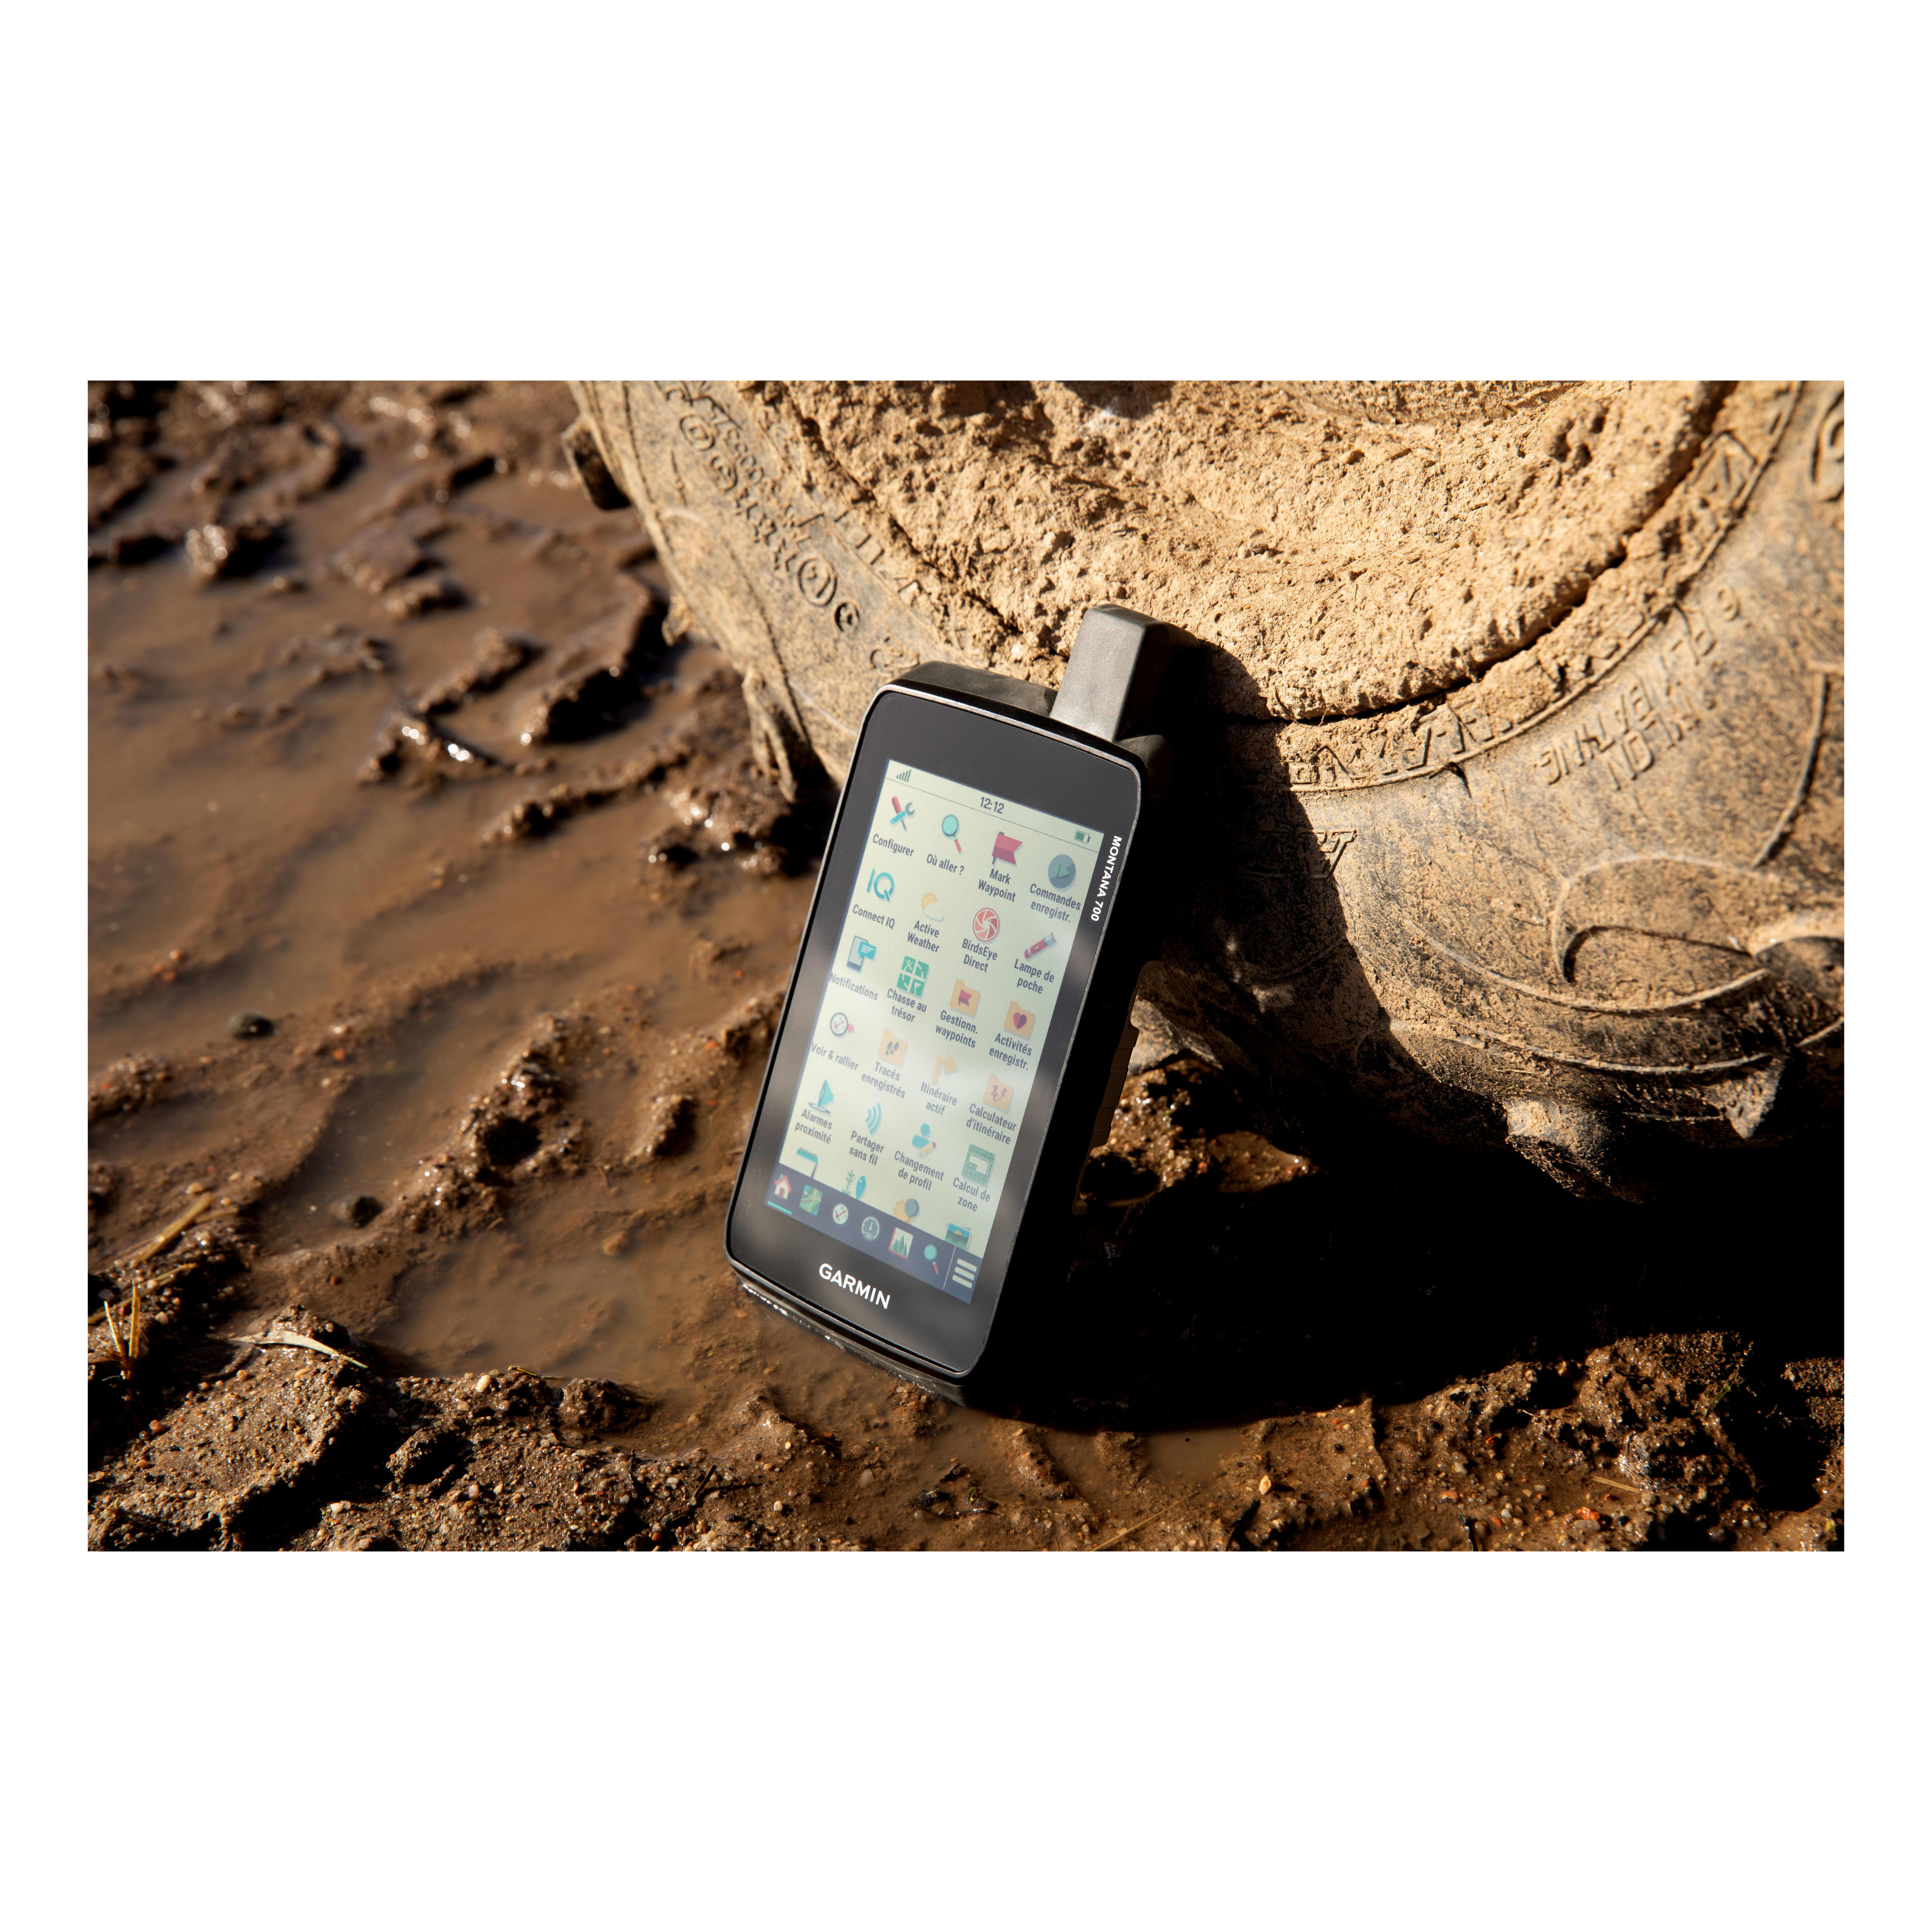 Garmin® Montana 700 Handheld GPS